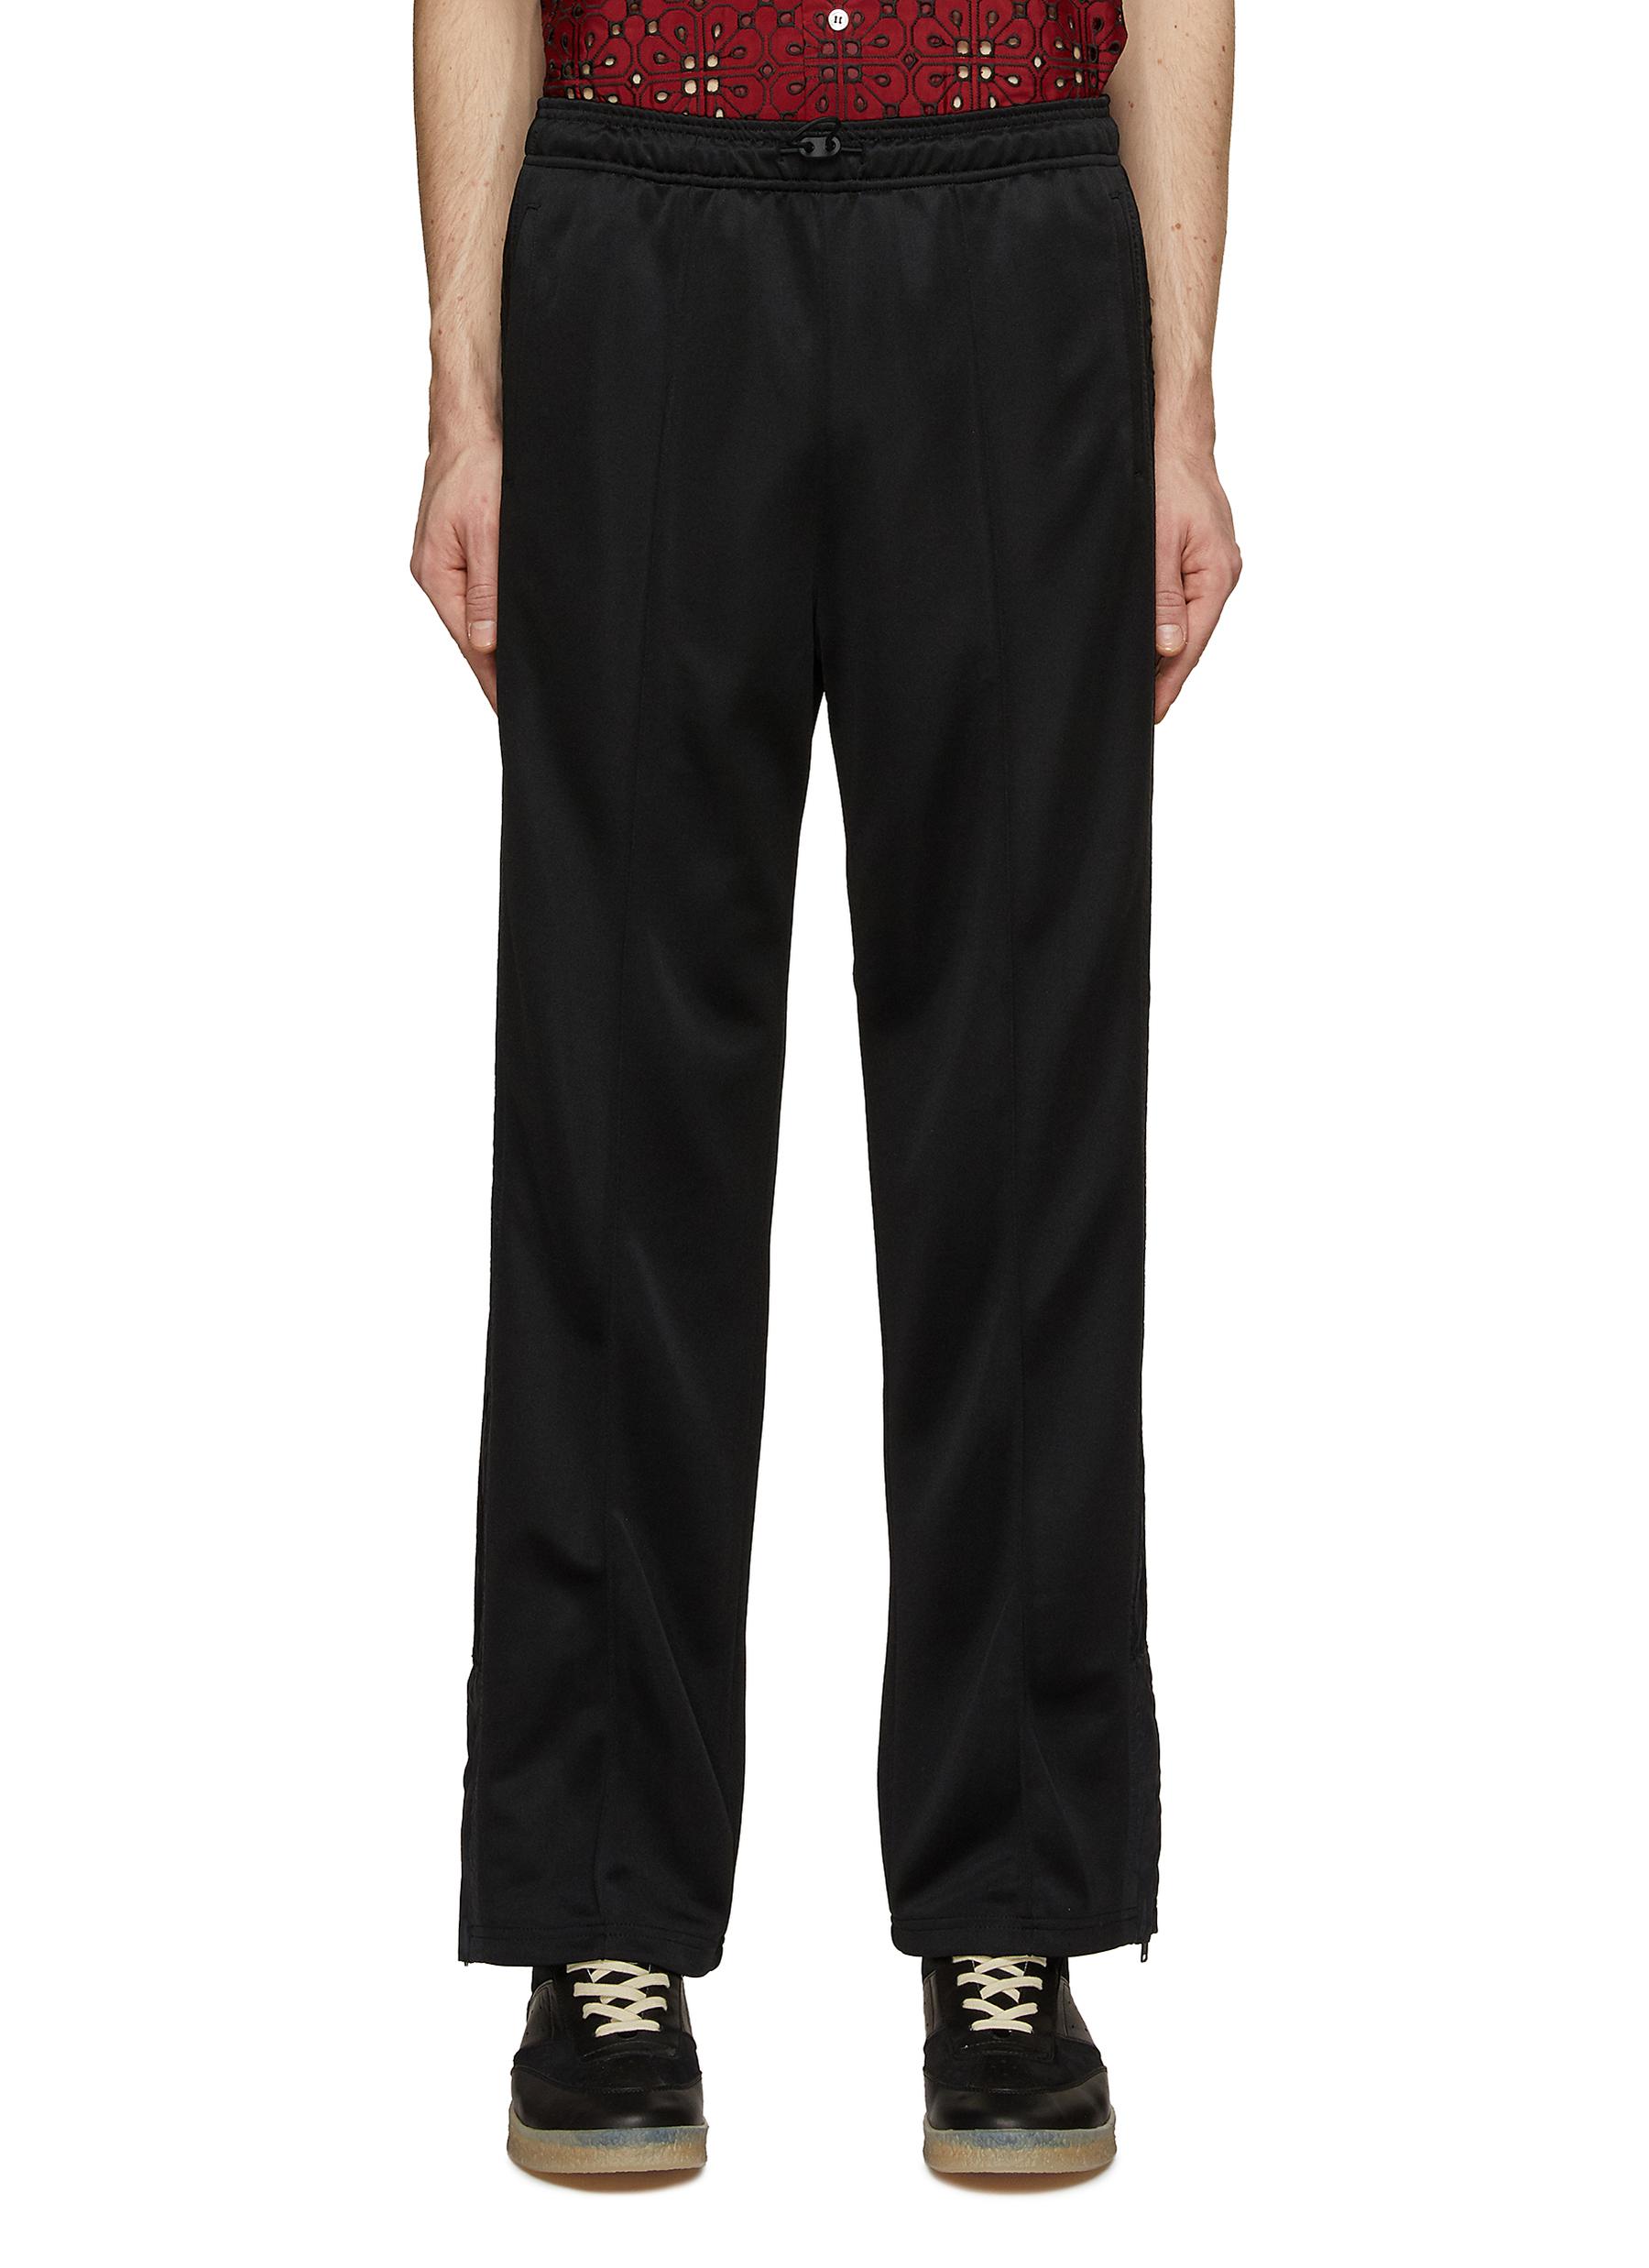 ASOS DESIGN slim crop smart pants in black satin with sequin side stripe |  ASOS | Mens fashion blazer, Men fashion casual shirts, Nigerian men fashion